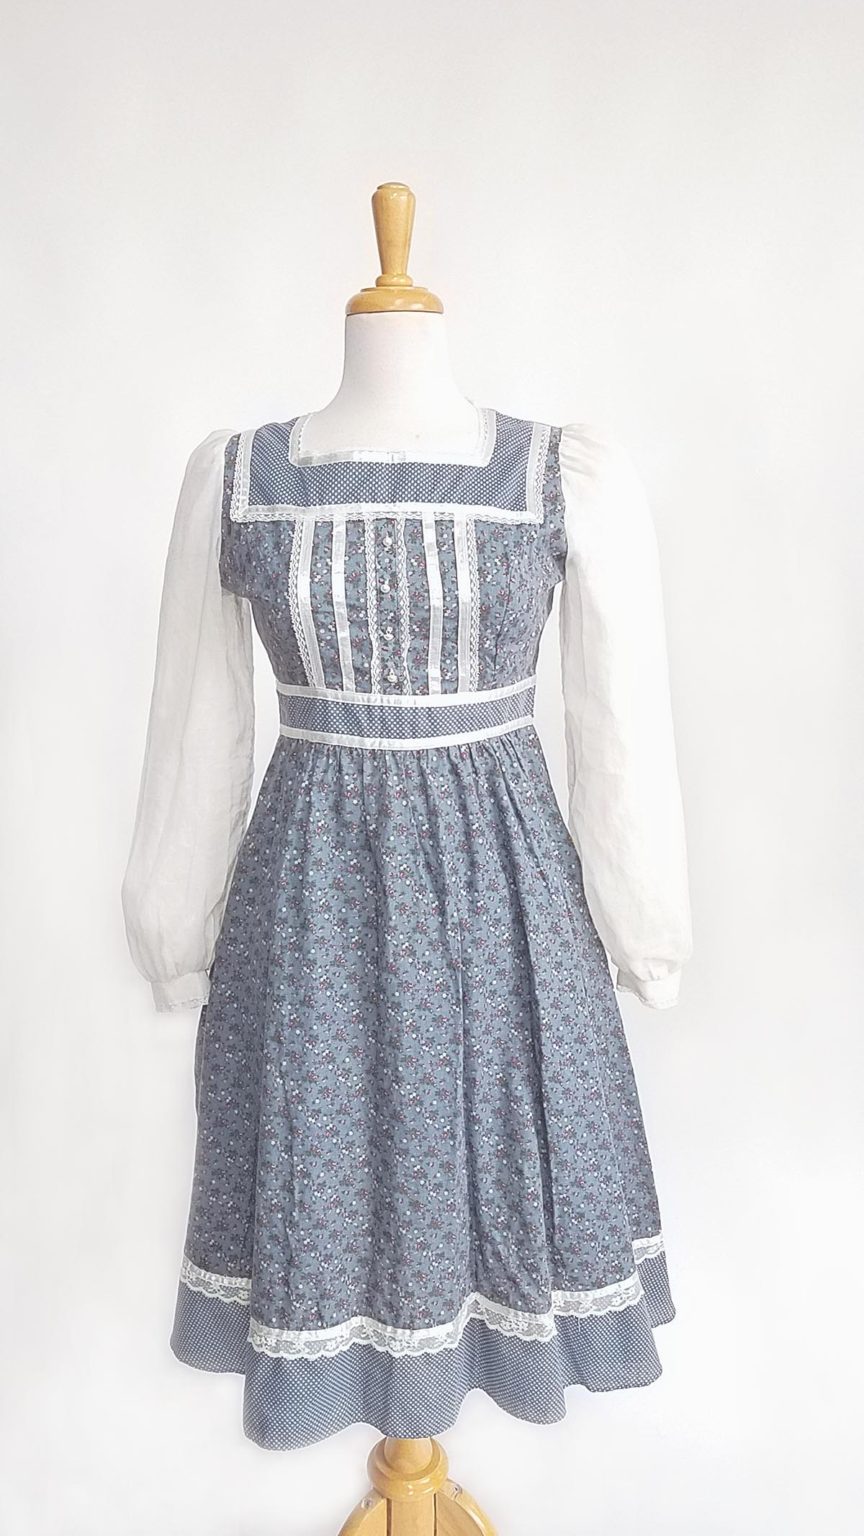 Gunne Sax Jeunes Filles 70s Vintage Polka Dot & Floral Prairie Dress